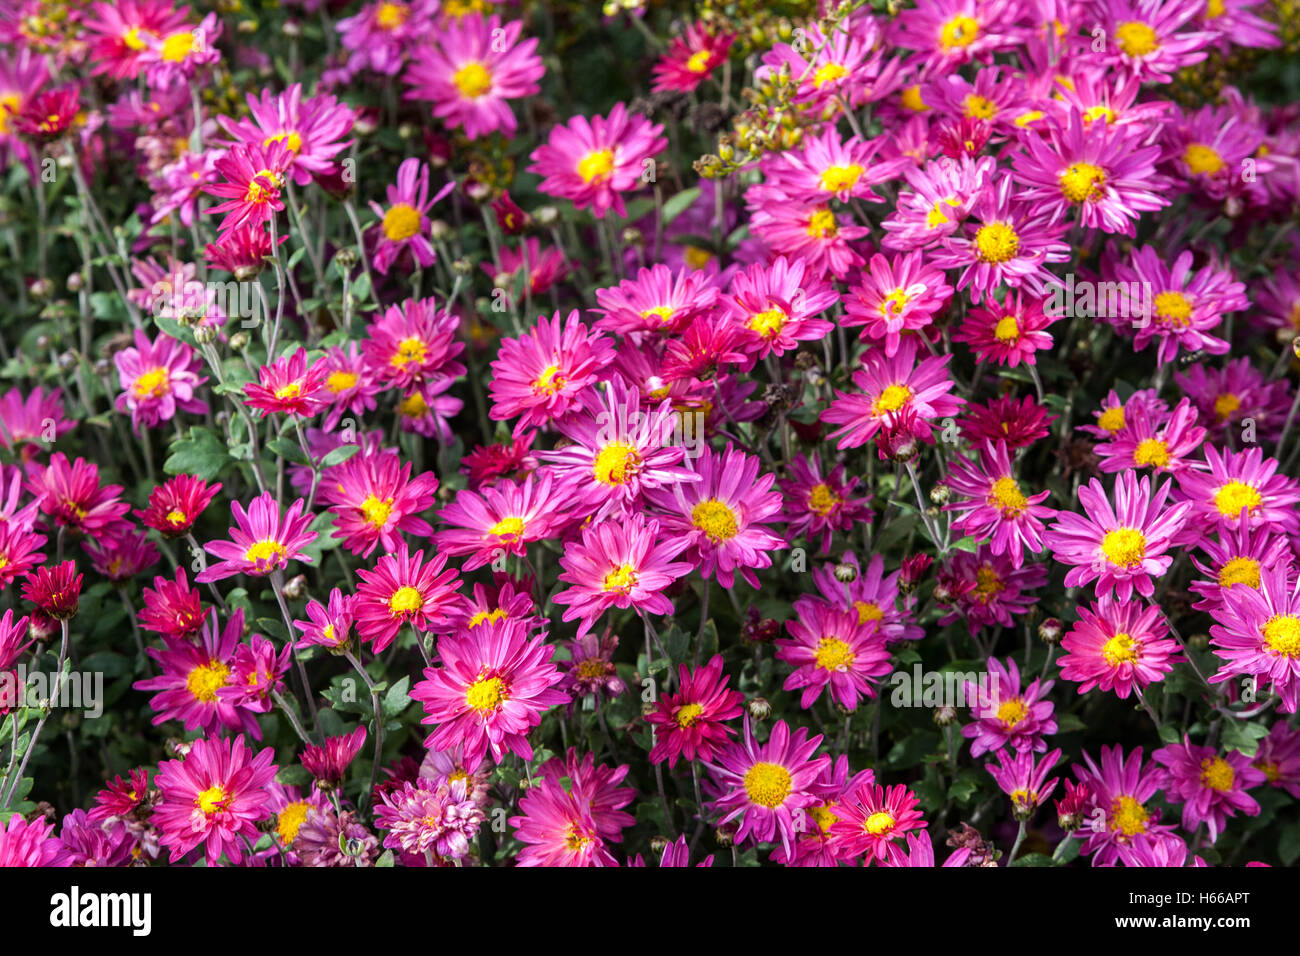 Purple Chrysanthemum herbstkuss, autumn colors in the garden flower bed, bedding flowers Stock Photo